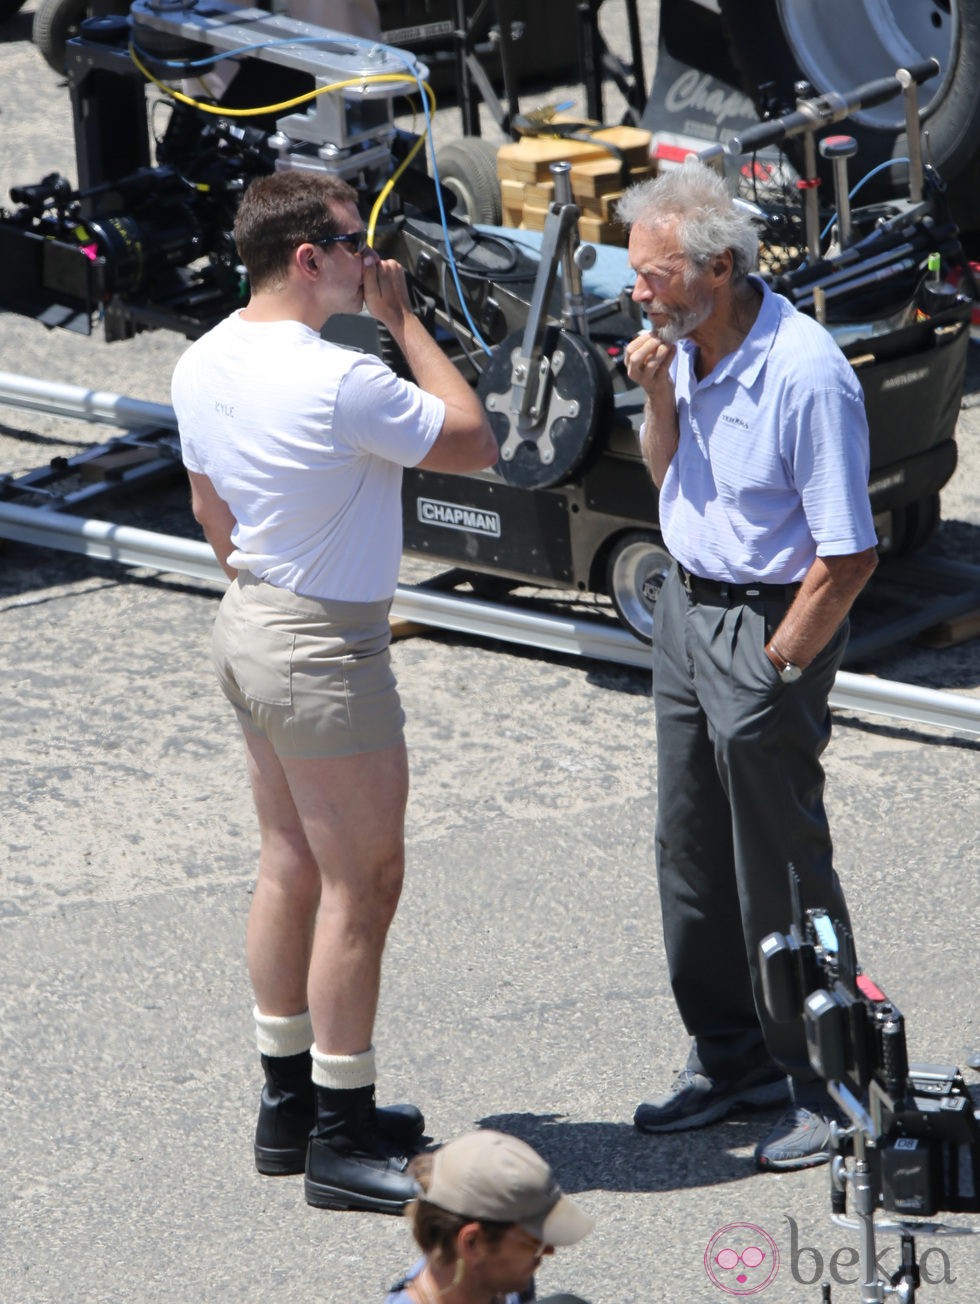 Bradley Cooper conversa con Clint Eastwood en el rodaje de 'American Sniper'